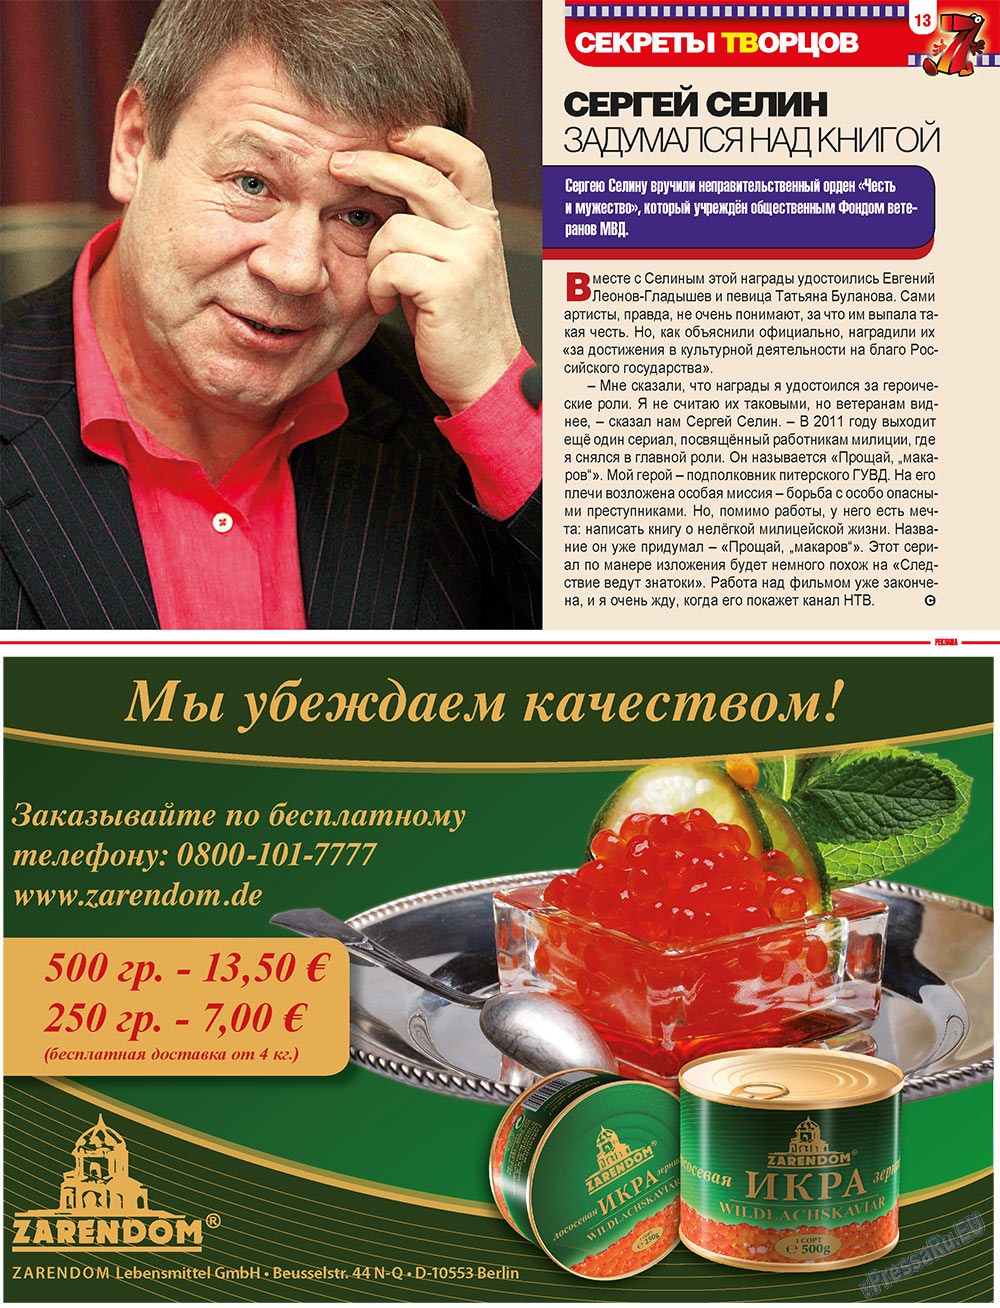 7плюс7я (журнал). 2011 год, номер 3, стр. 13